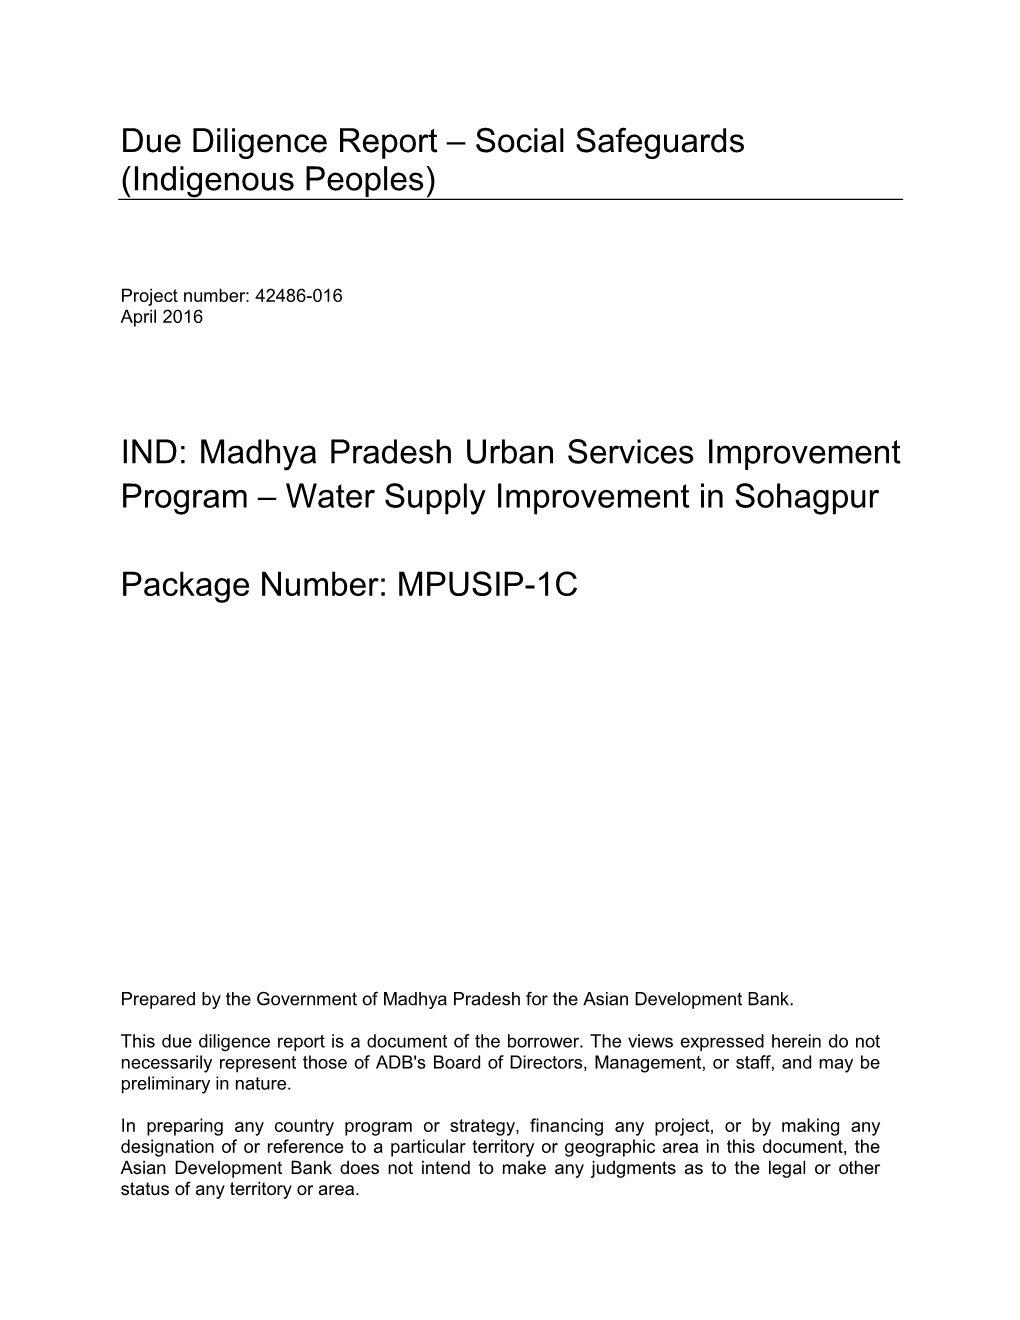 (Sohagpur Water Supply Improvement) Indigenous Peoples Due Diligen